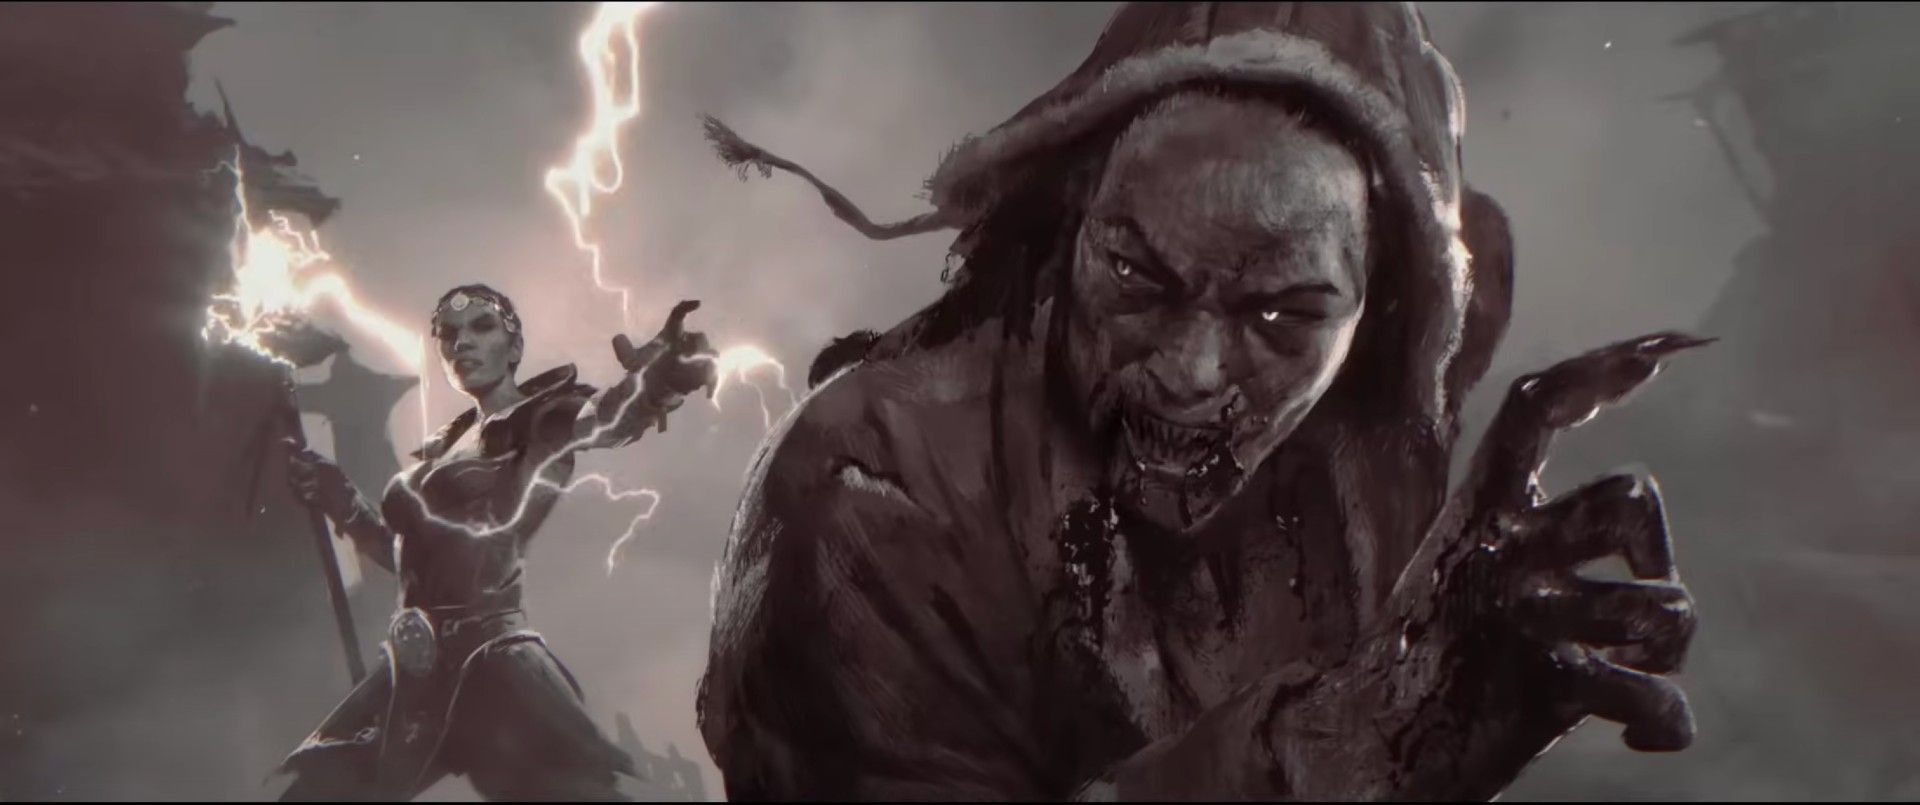 Diablo 4 Developers On Upcoming Season Of Blood’s “Power Fantasy”